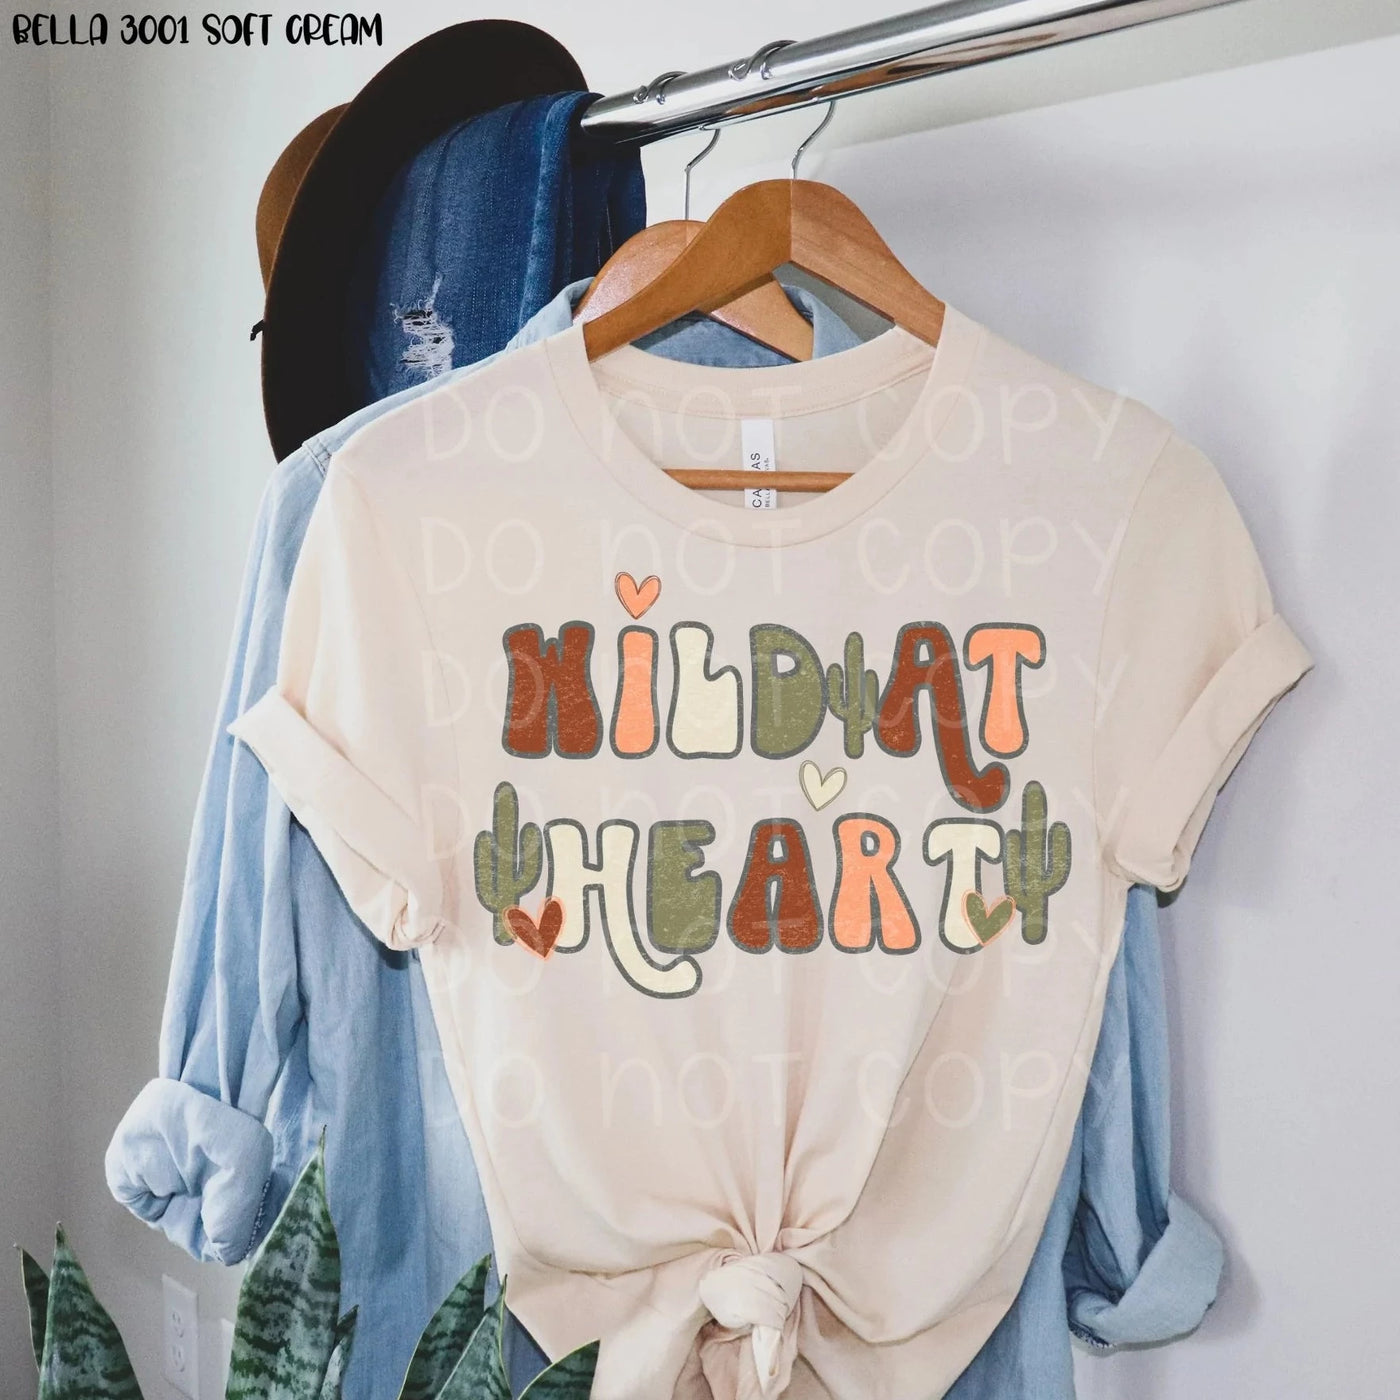 "Wild at Heart" T-shirt (shown on "Soft Cream")